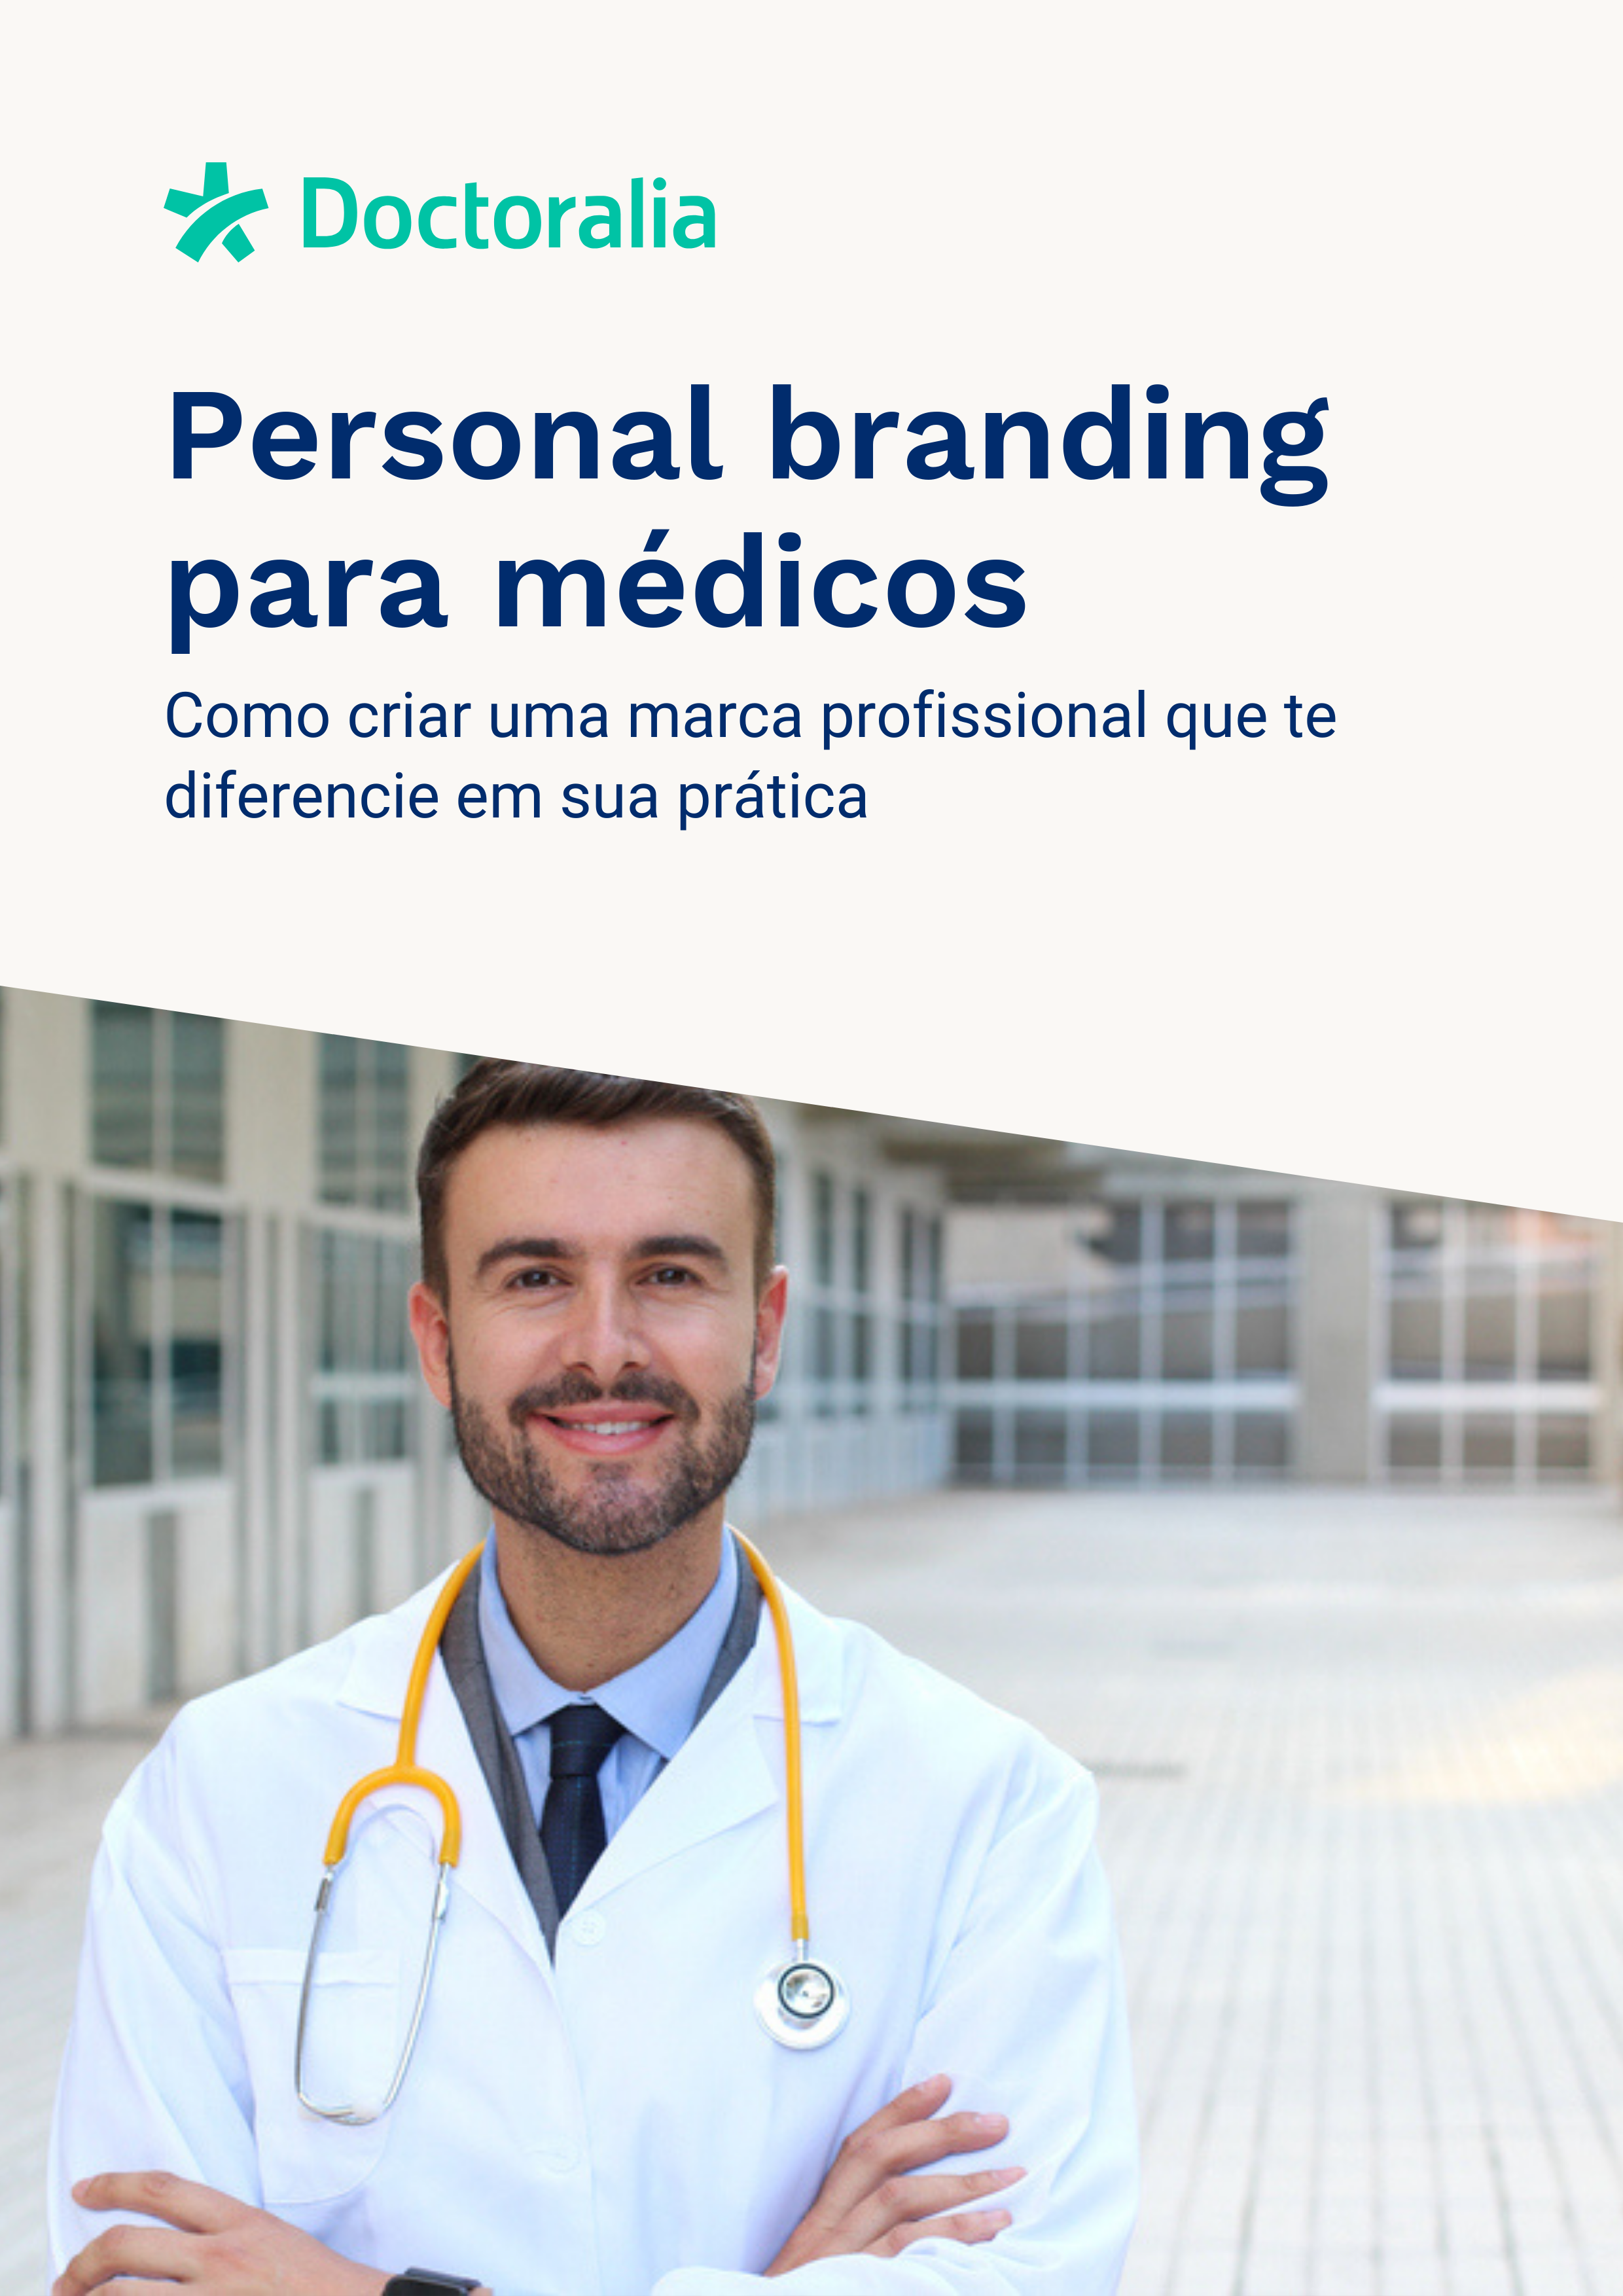 Personal branding para médicos - Doctoralia